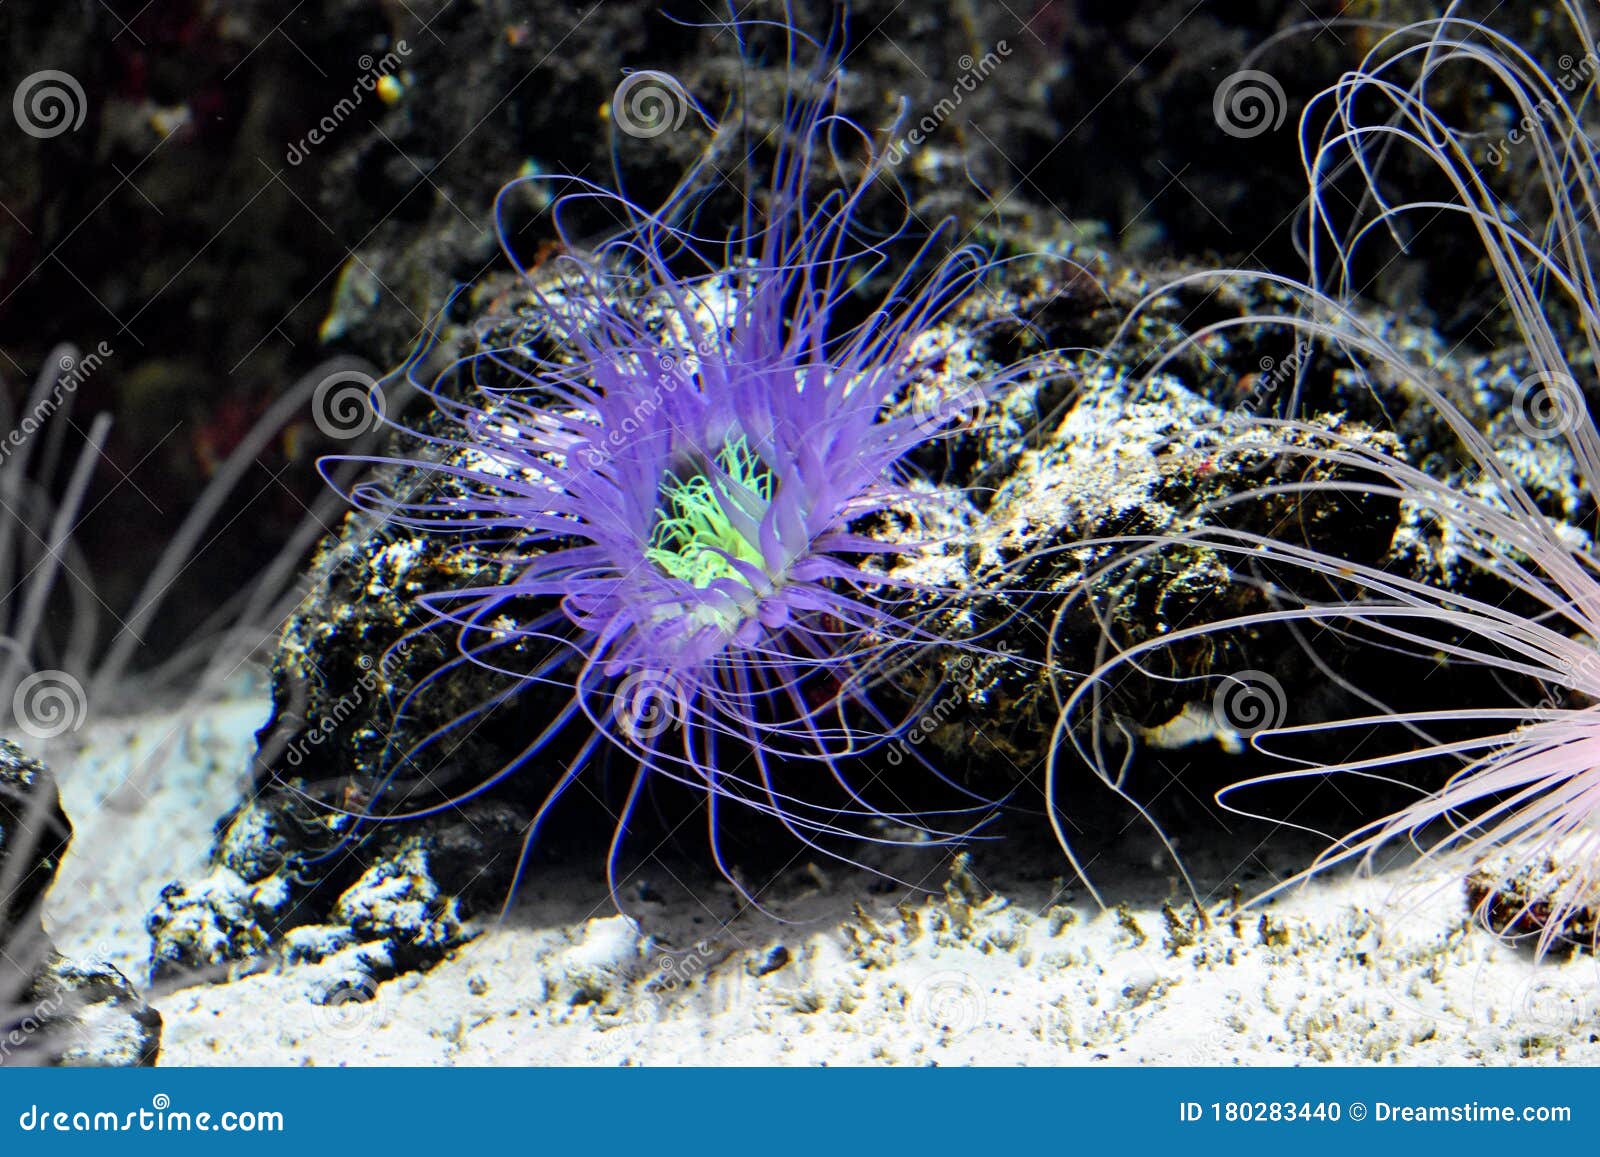 Sea Anemone in Natural Habitat, Marine Plants and Animals Stock Photo -  Image of ocean, anemone: 180283440